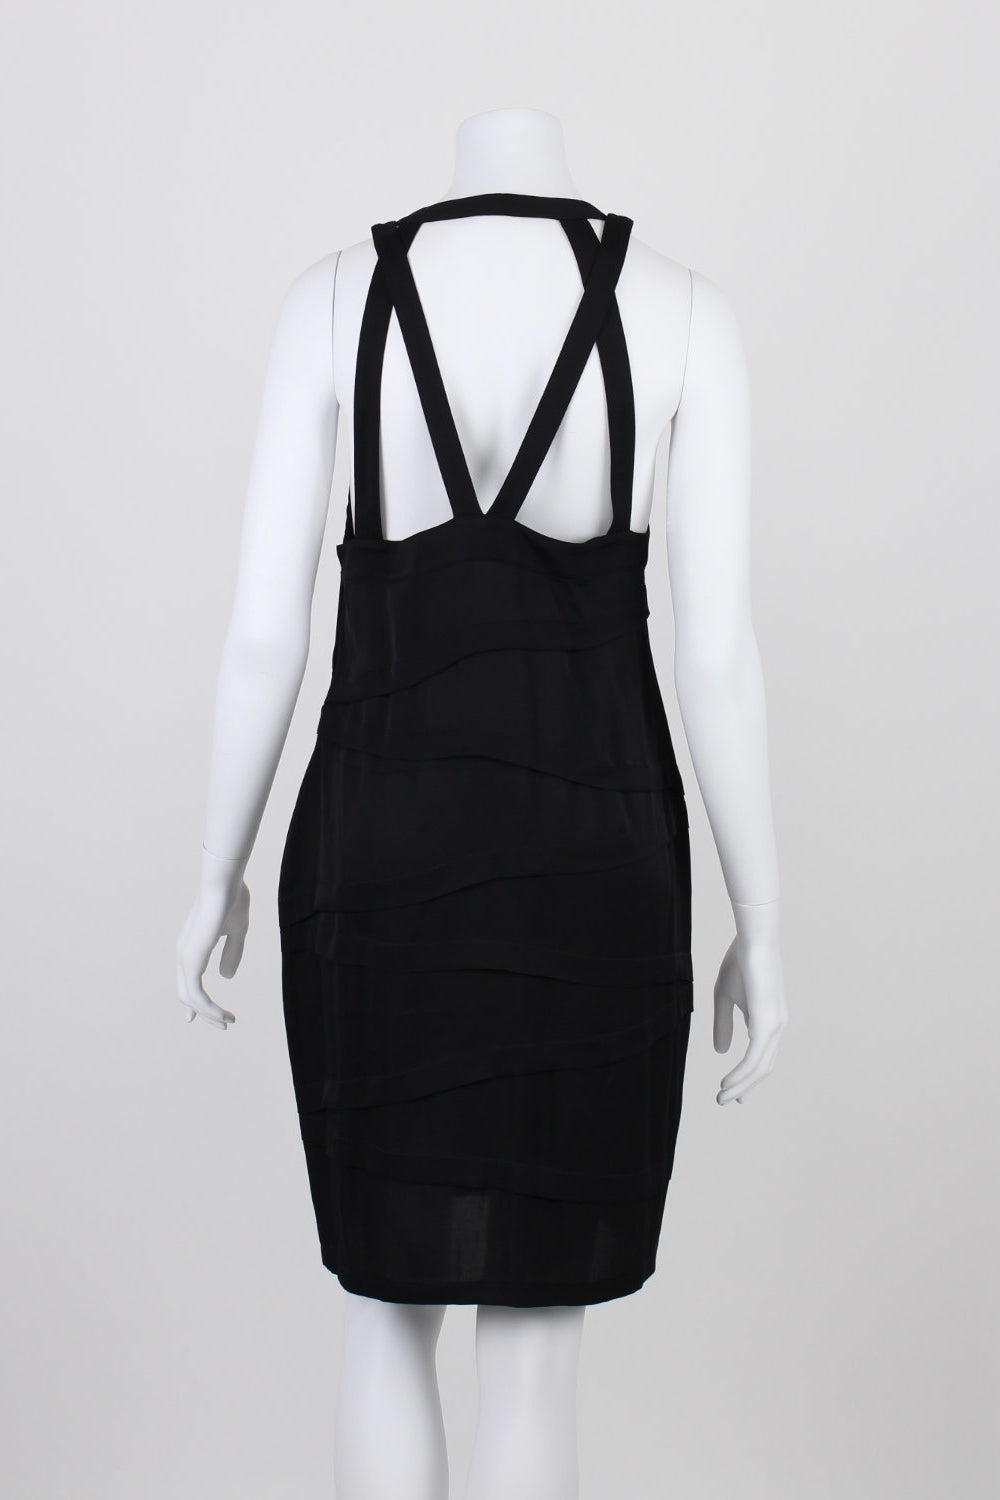 Ginger & Smart Black Strappy Silk Dress 12